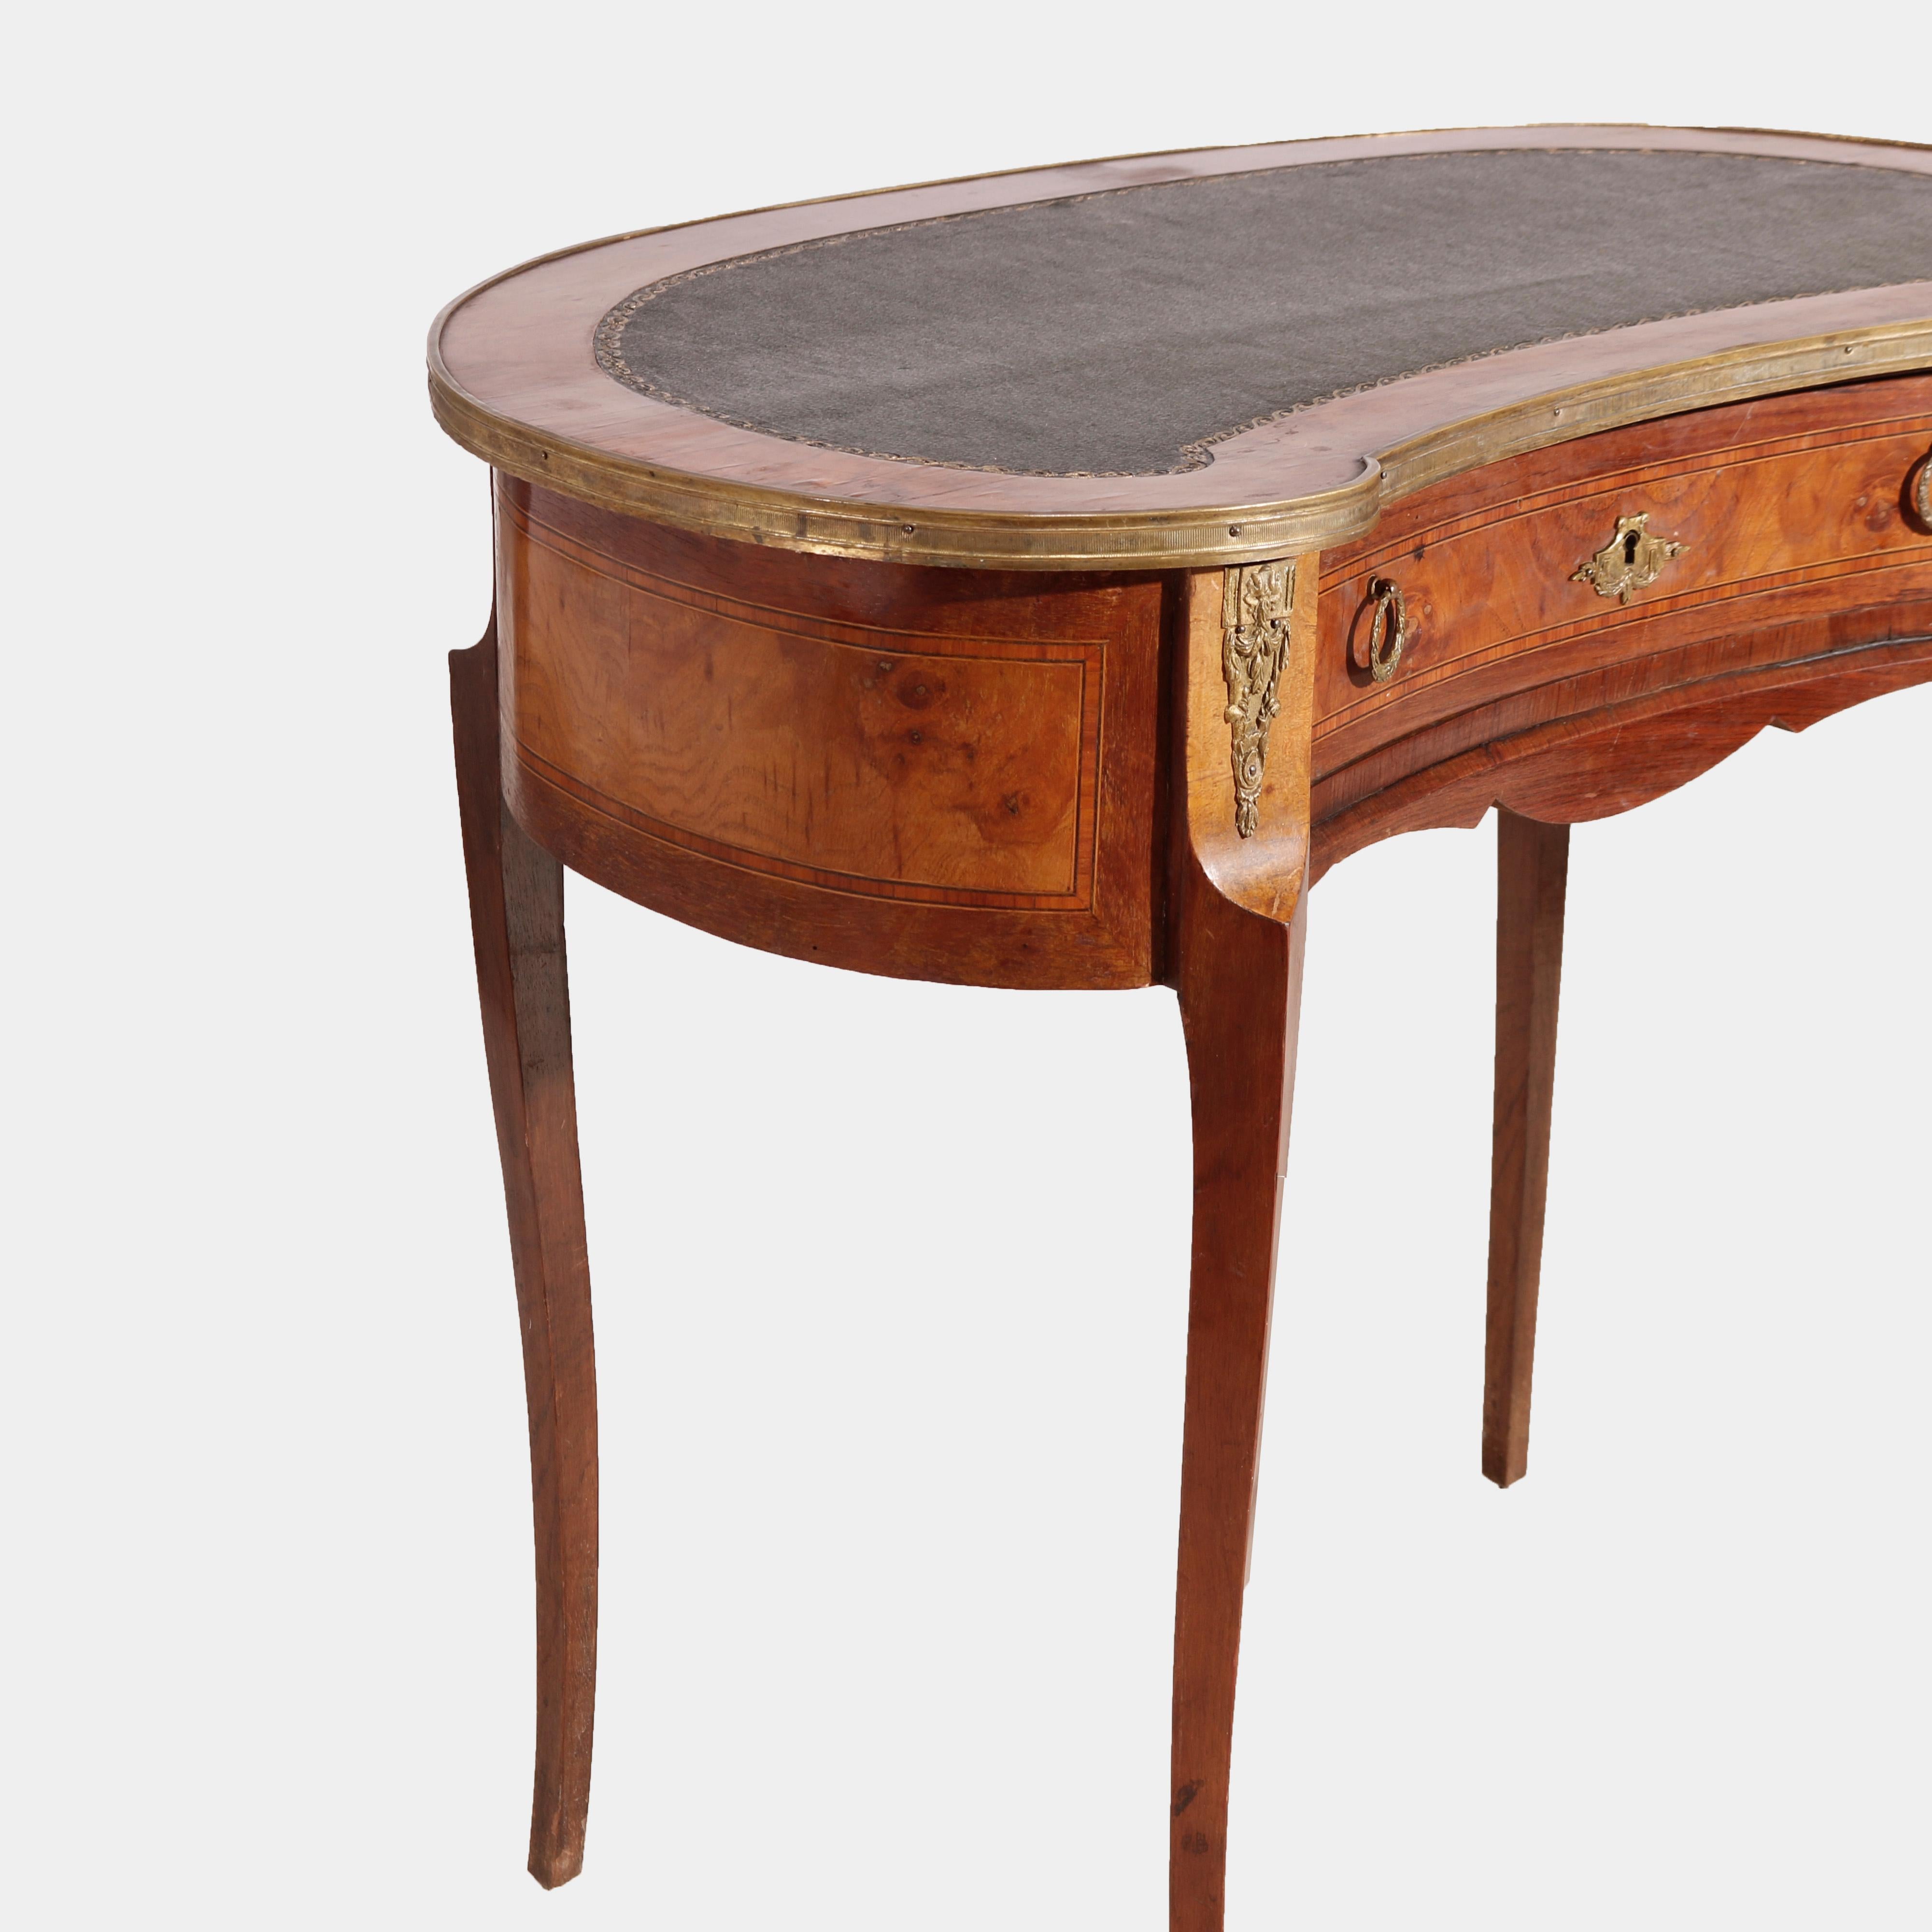 Antique French Style Burled Walnut Kidney Shaped Ladies Desk, 19th Century 12